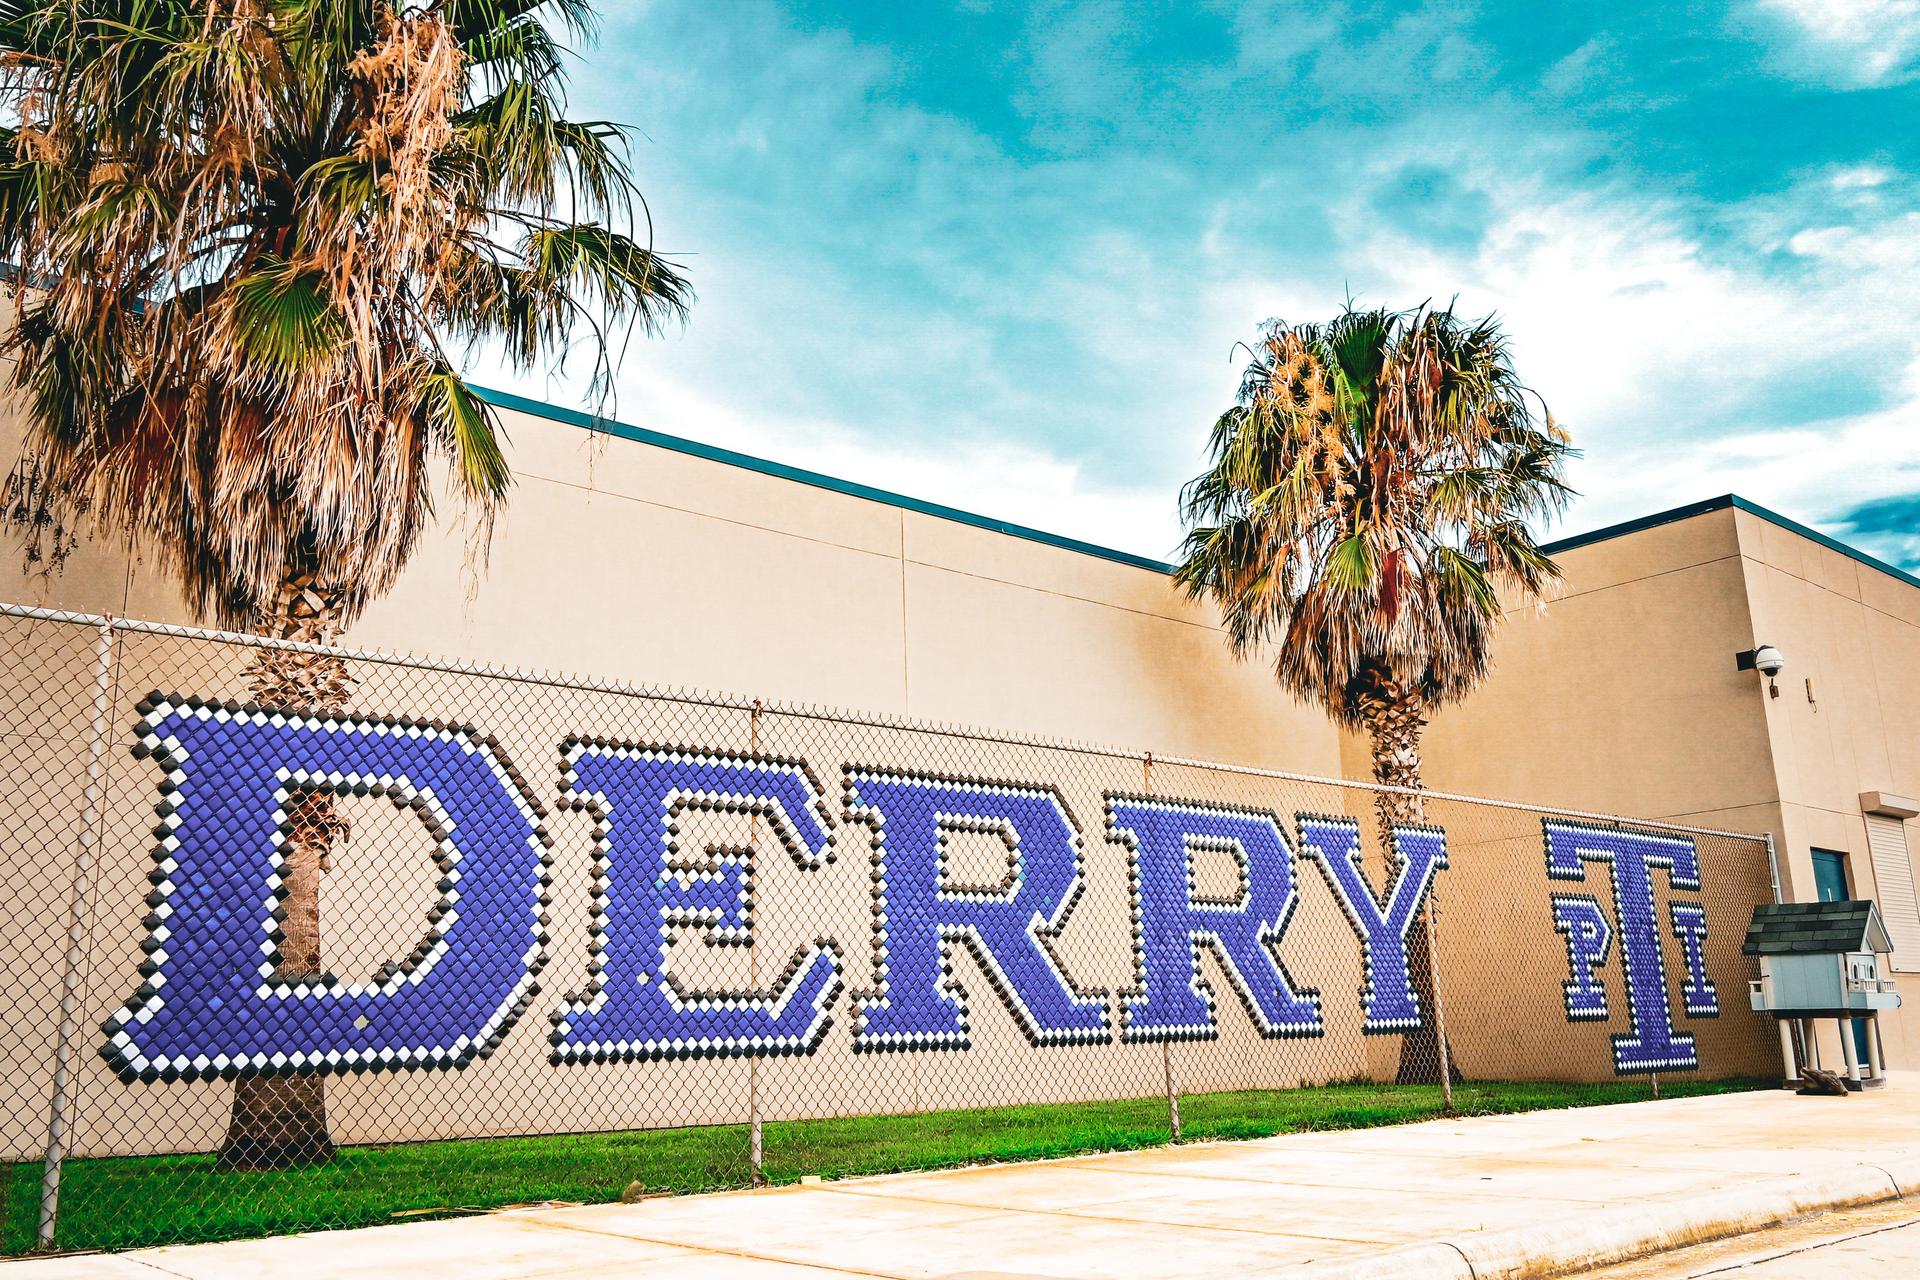 Derry Elementary